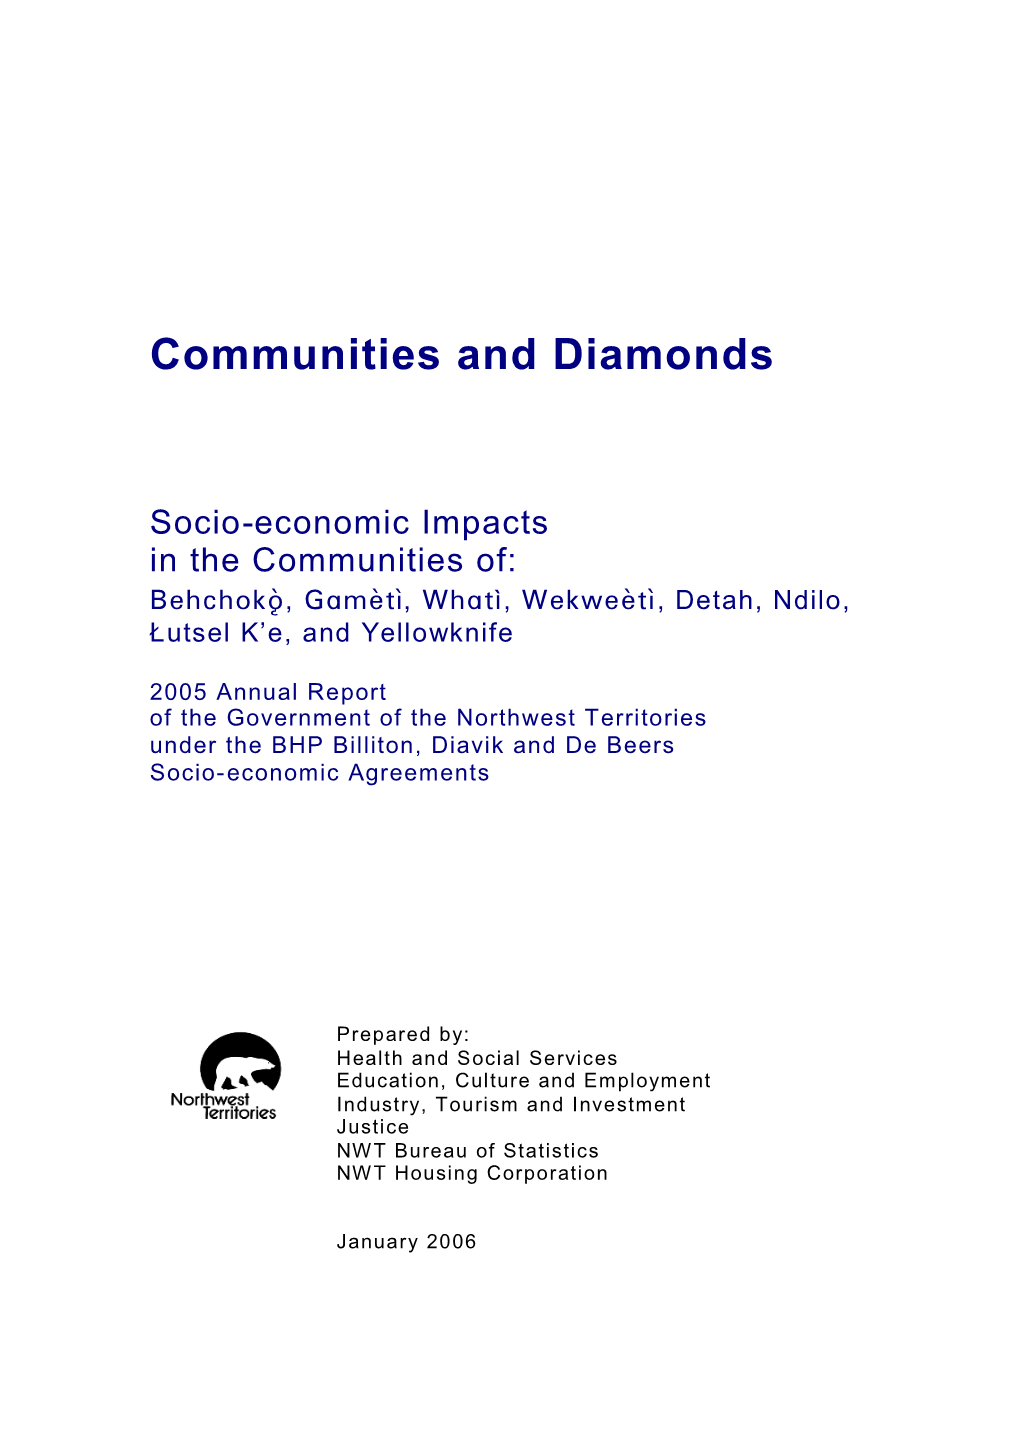 Socio-Economic Impacts in the Communities Of: Behchoko, Gameti